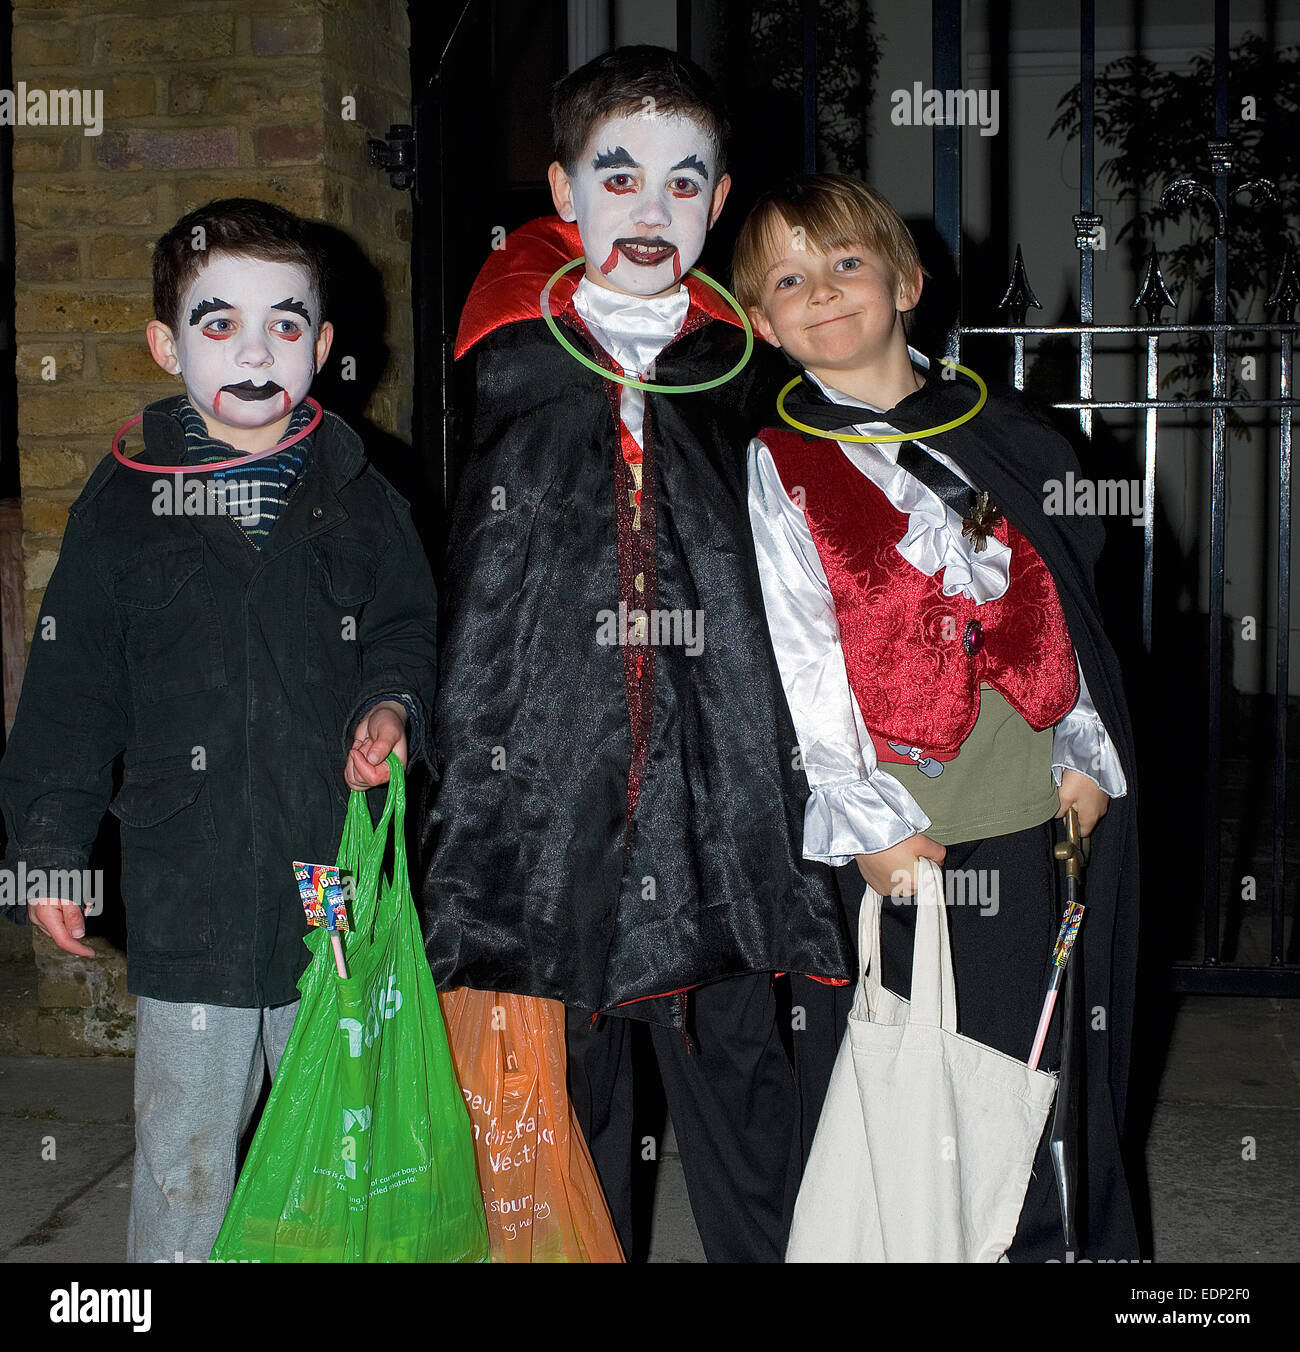 Three American children go trick or treating in St. John's Wood on Halloween. Stock Photo